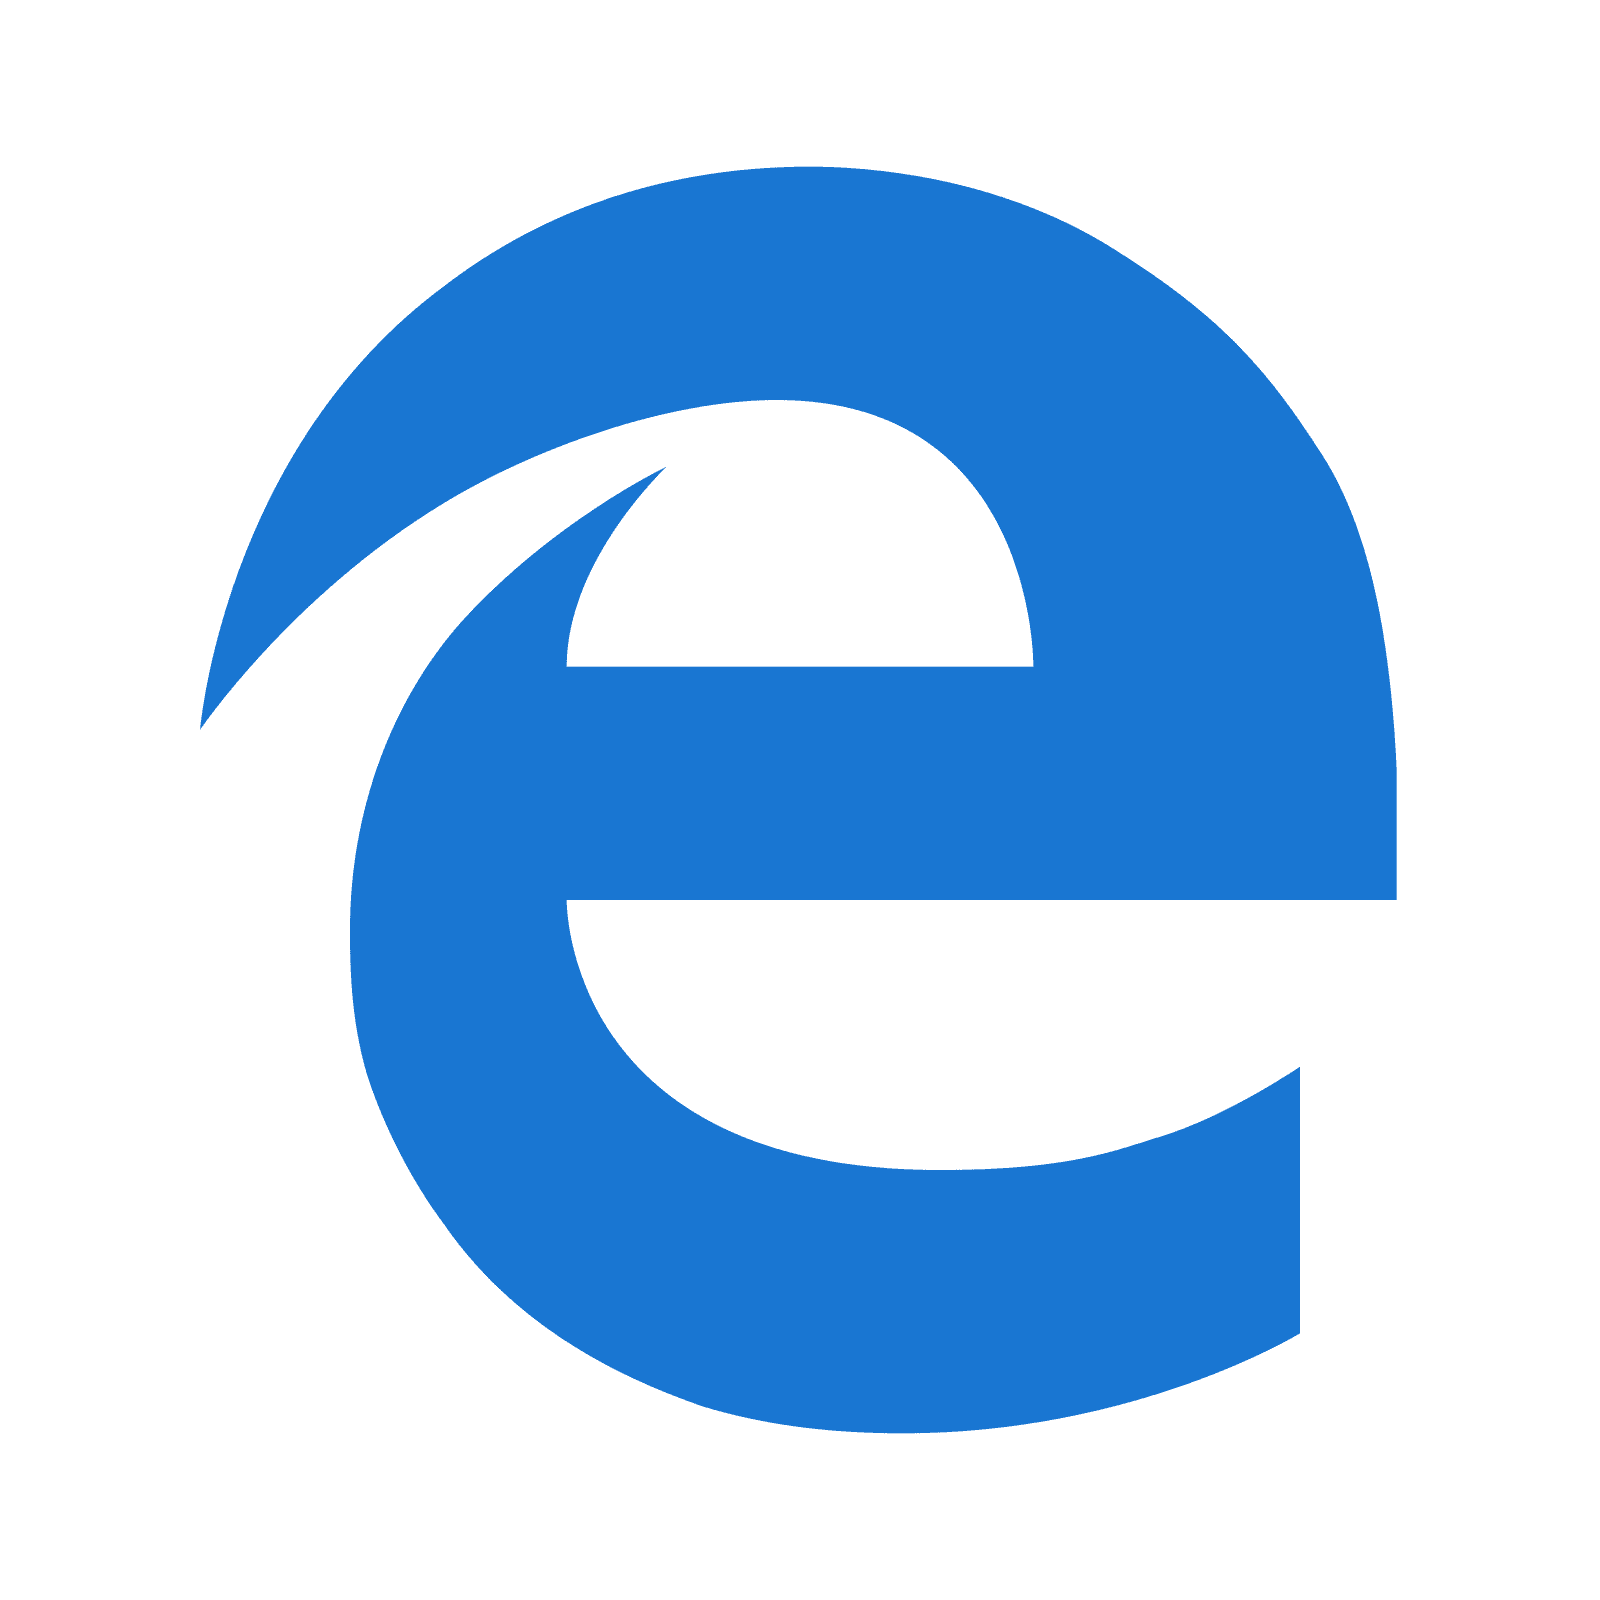 microsoft edge browser download